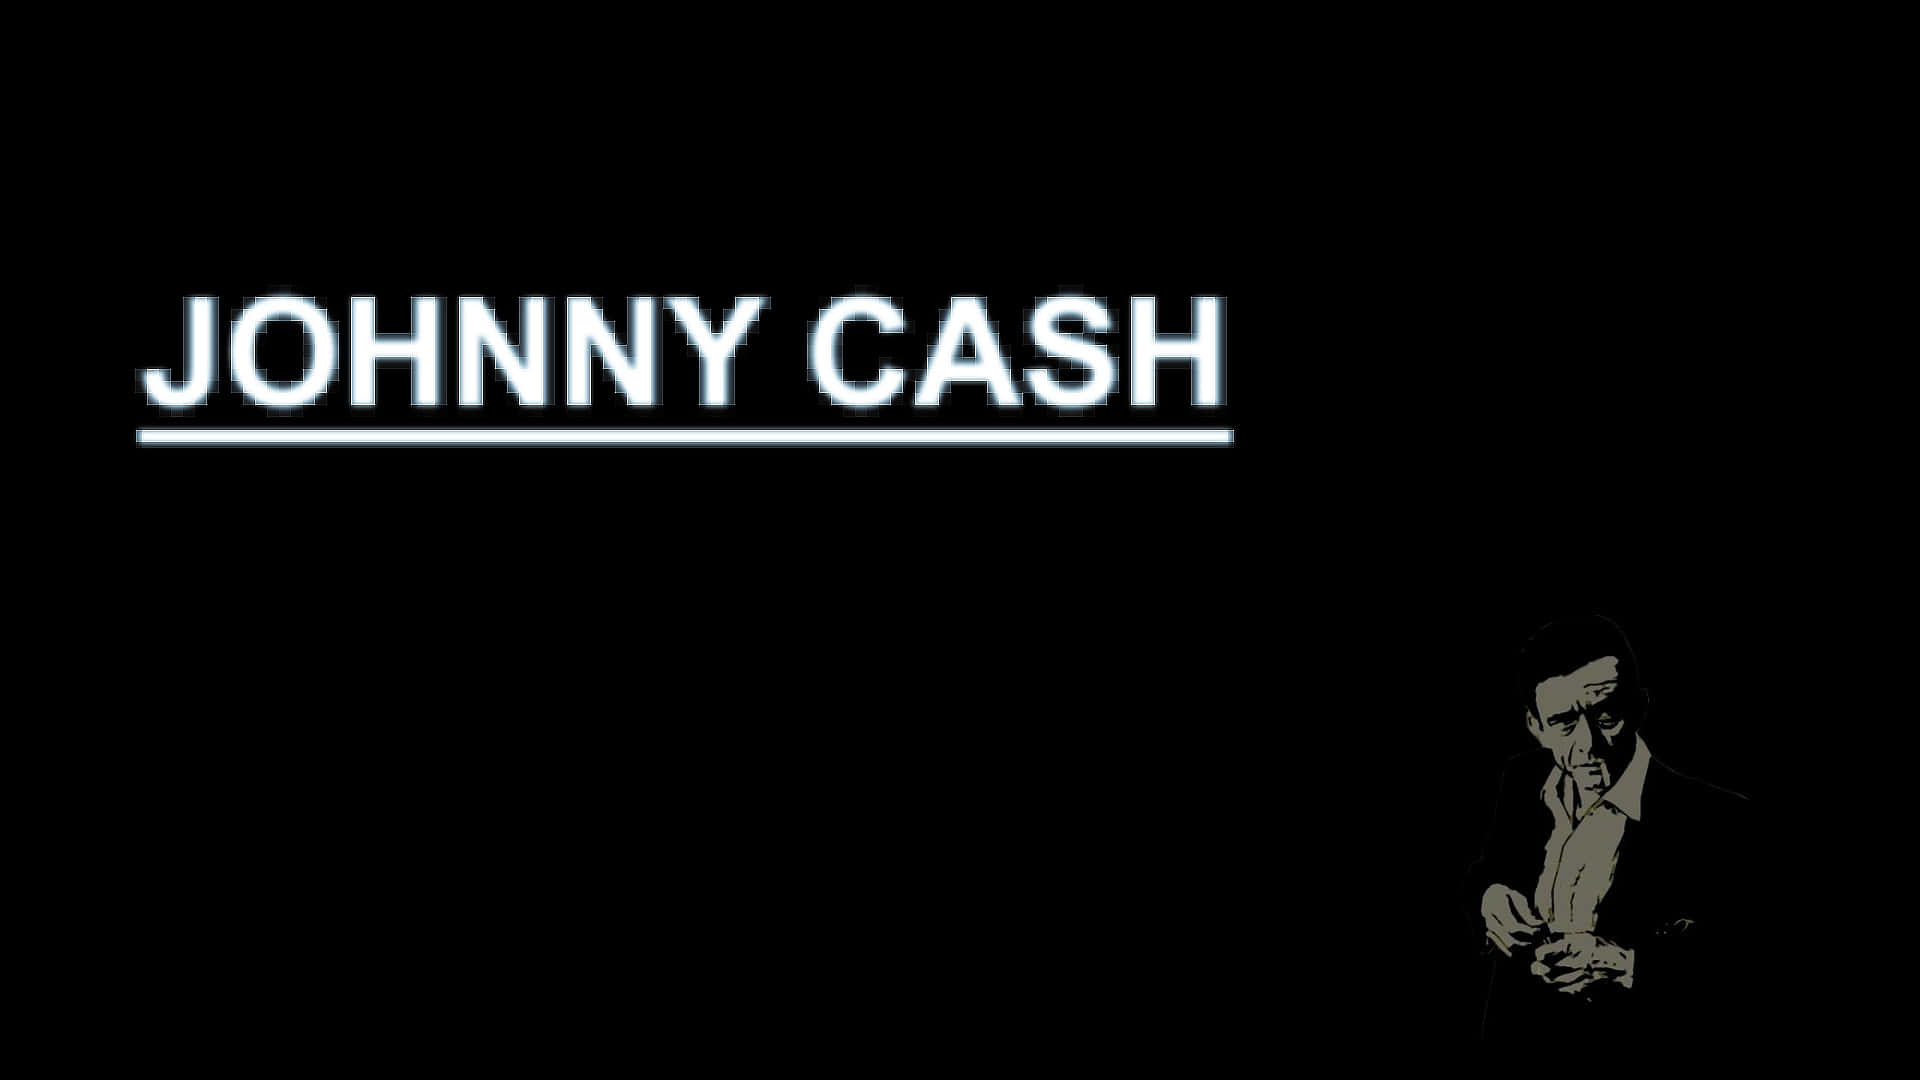 Leggendadel Canto, Johnny Cash